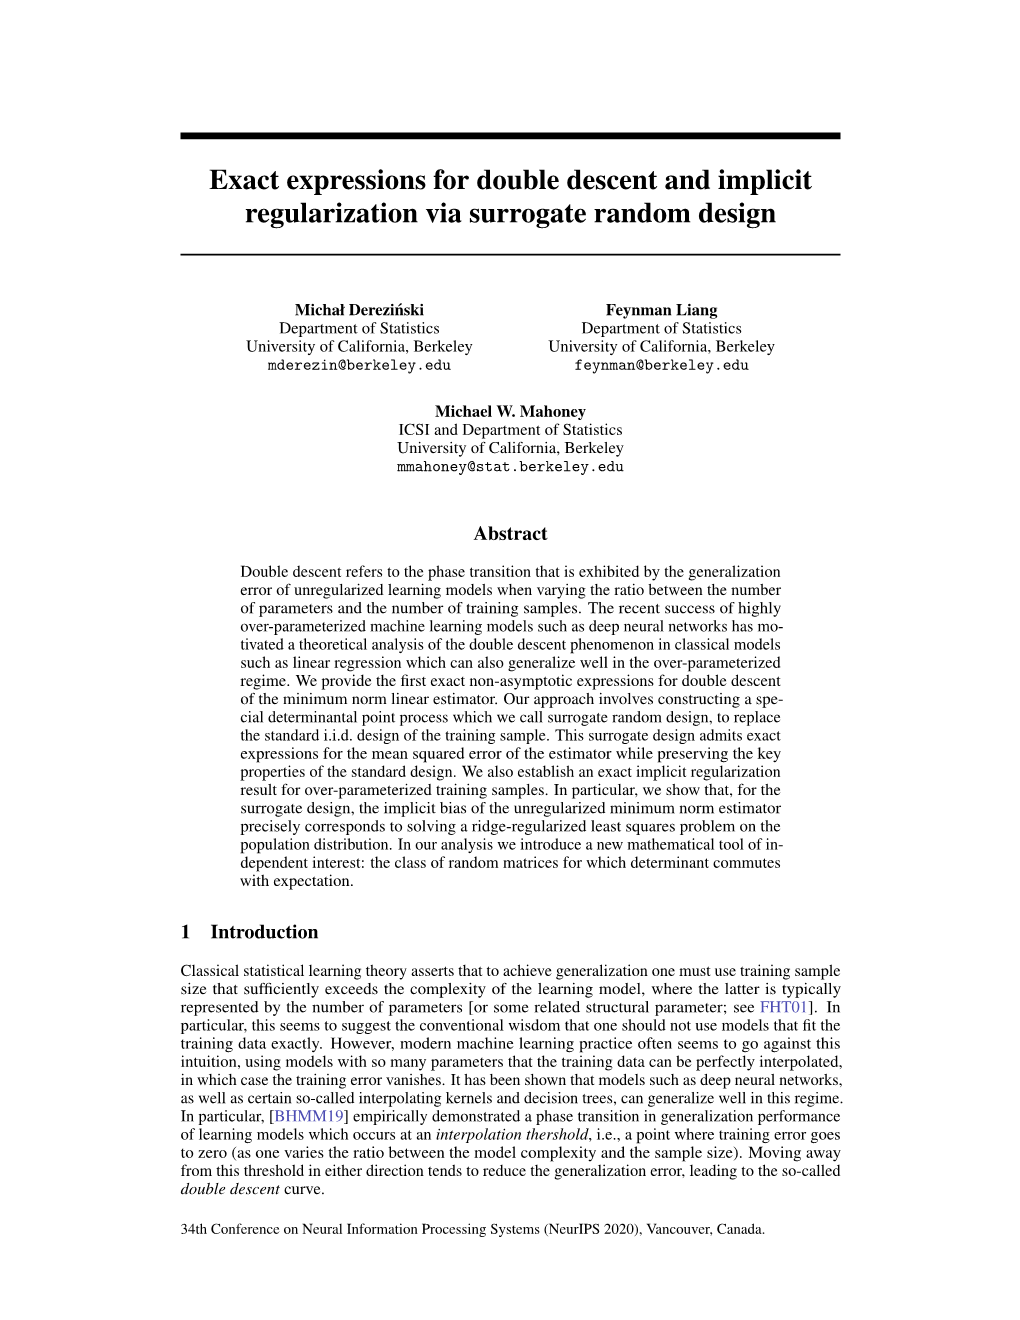 Exact Expressions for Double Descent and Implicit Regularization Via Surrogate Random Design